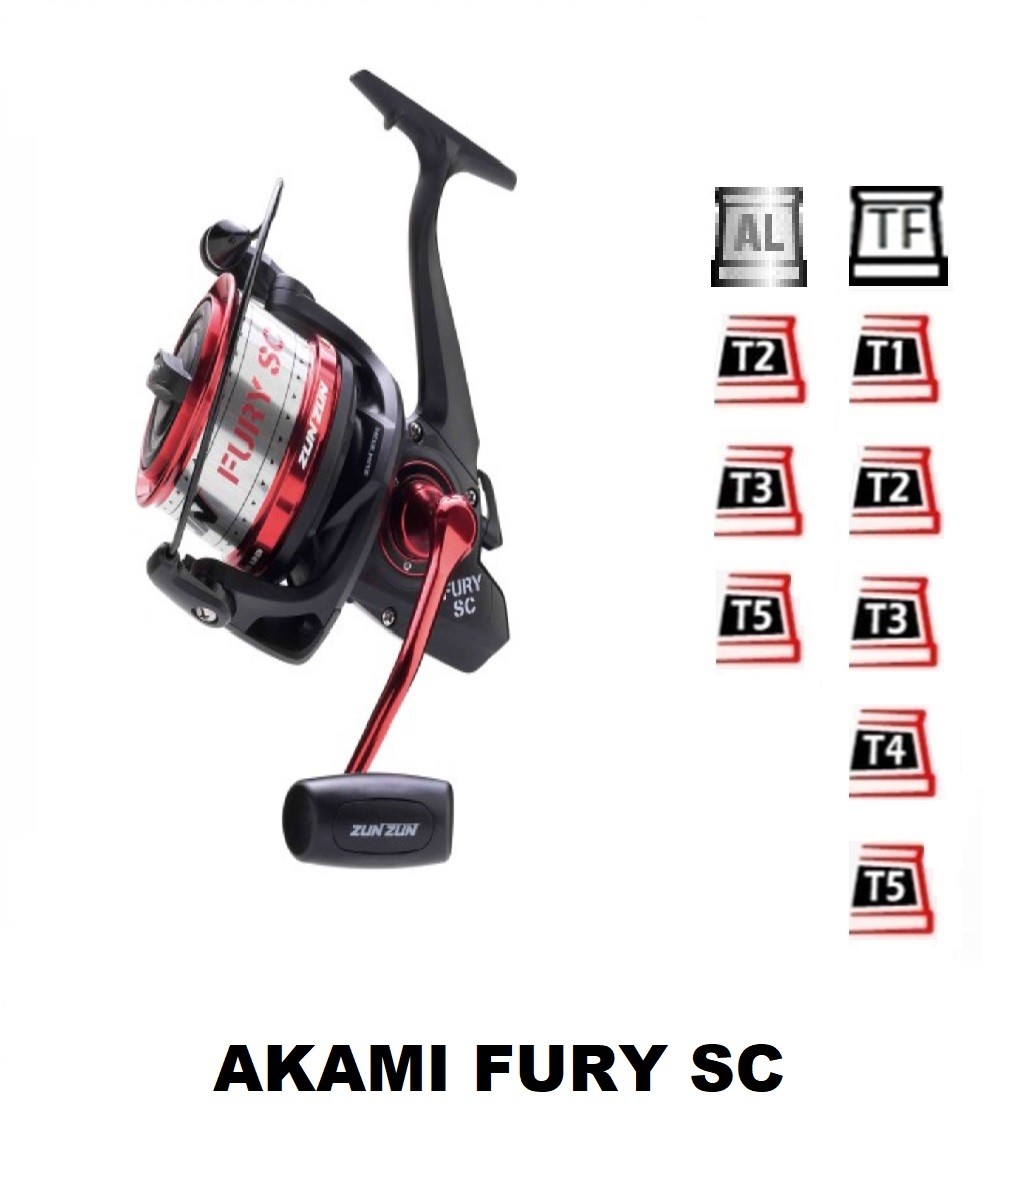 Akami Fury SC